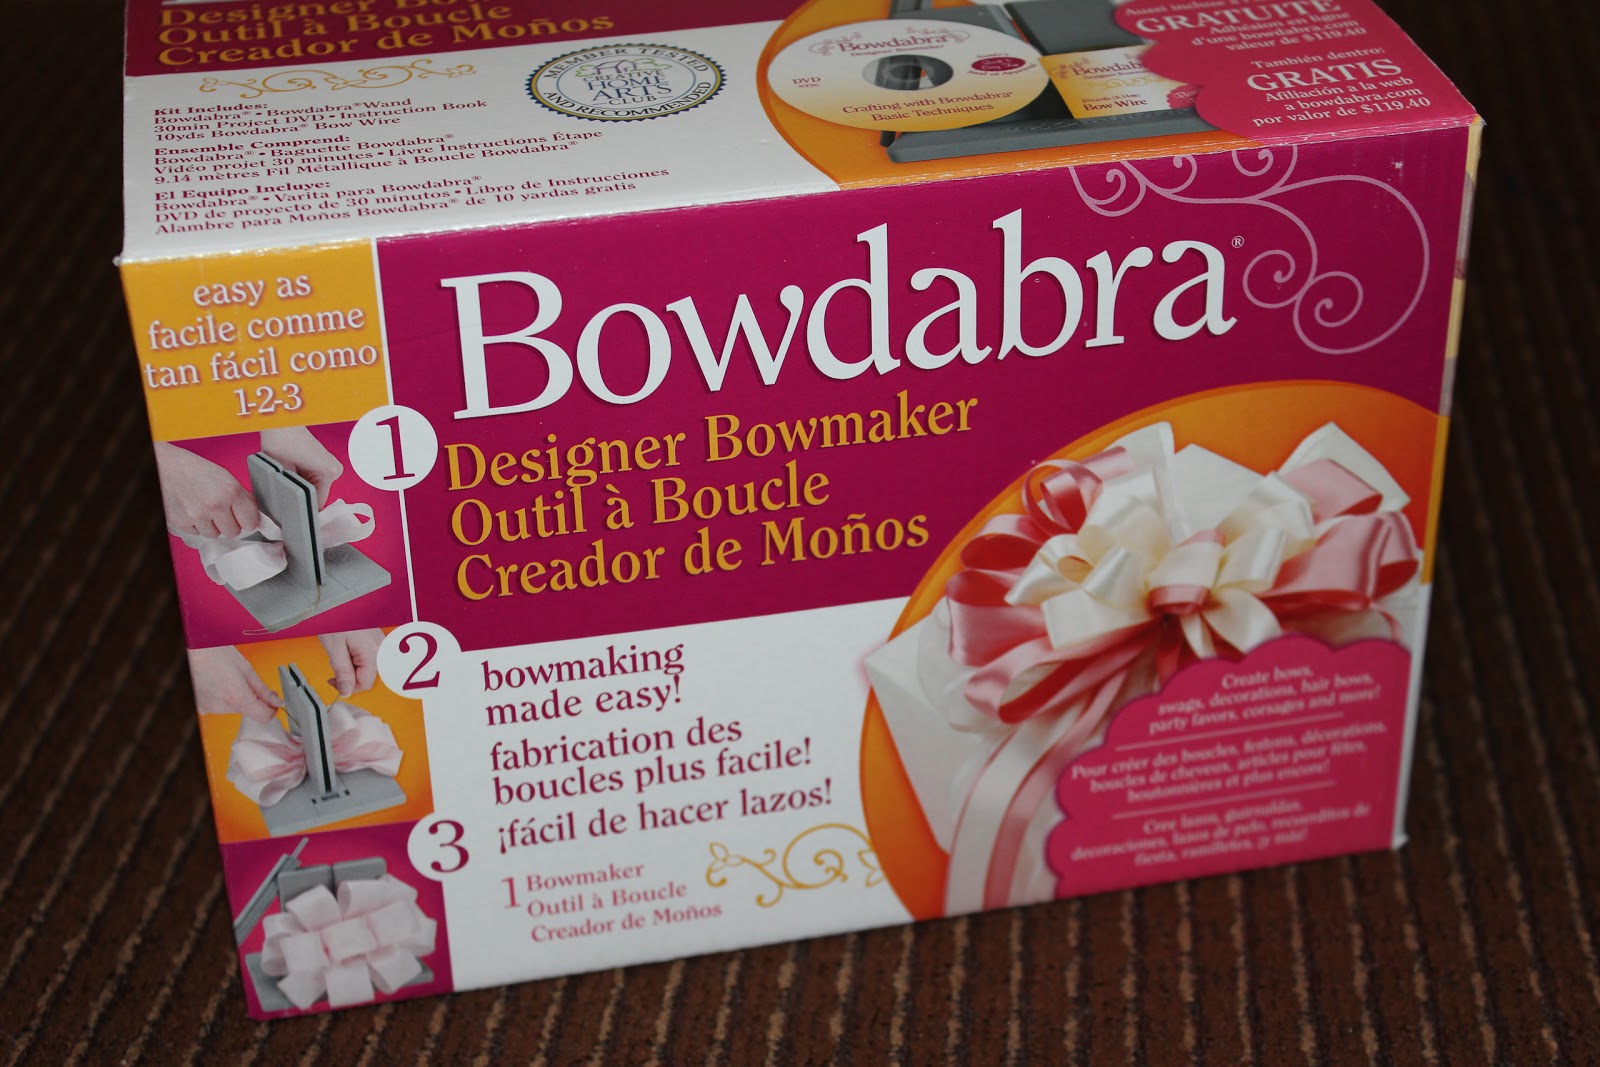 Mini Bowdabra Bow Favor Maker, 1 Each 